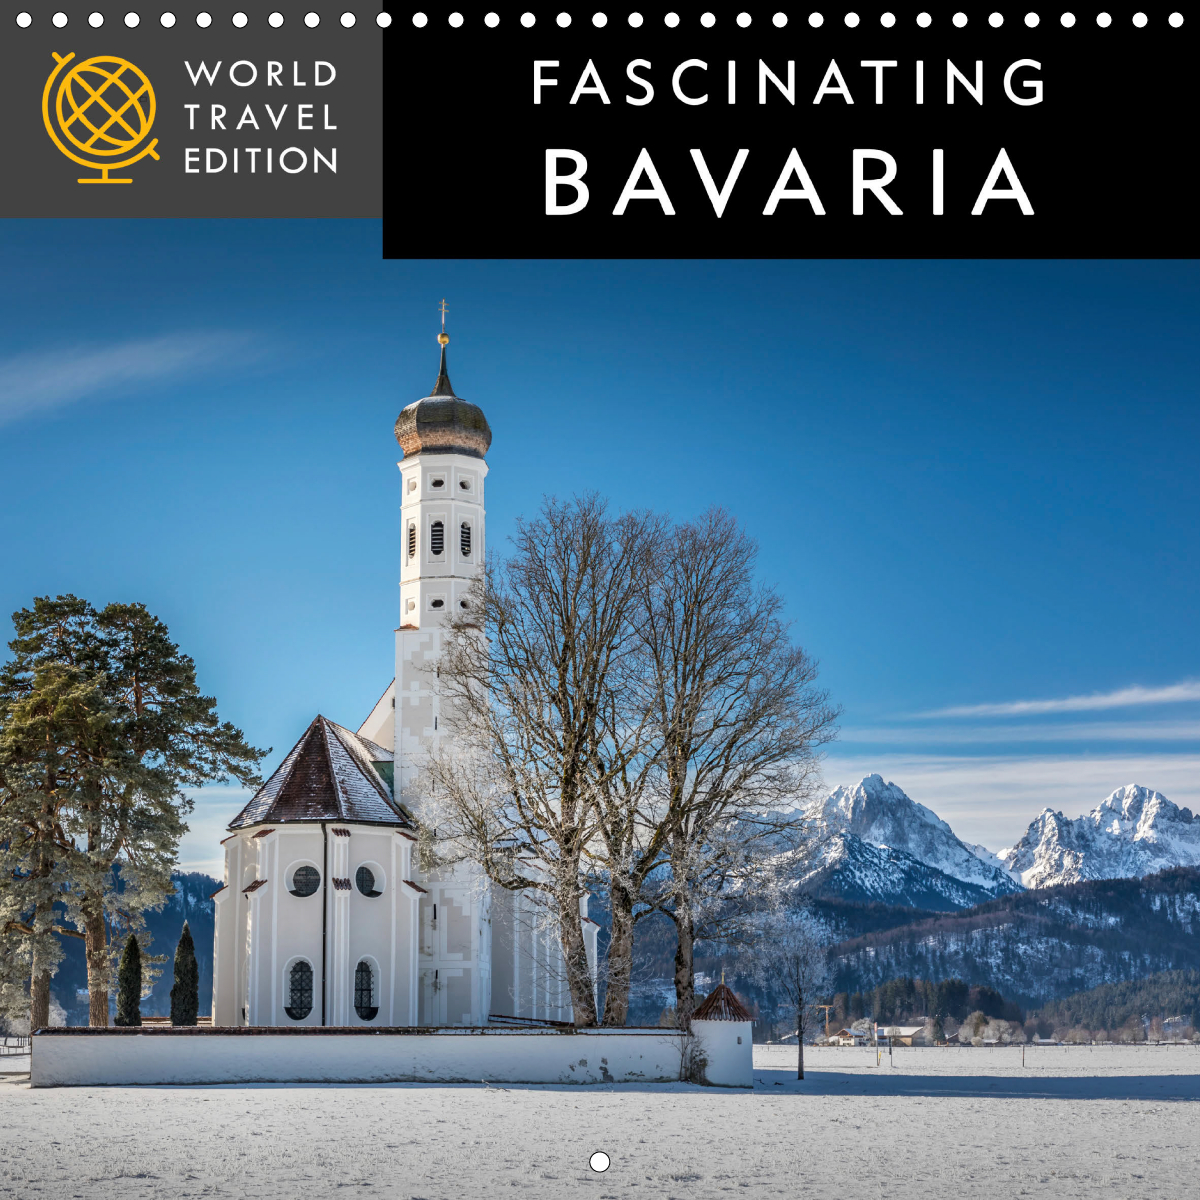 Calendar - Fascinating Bavaria